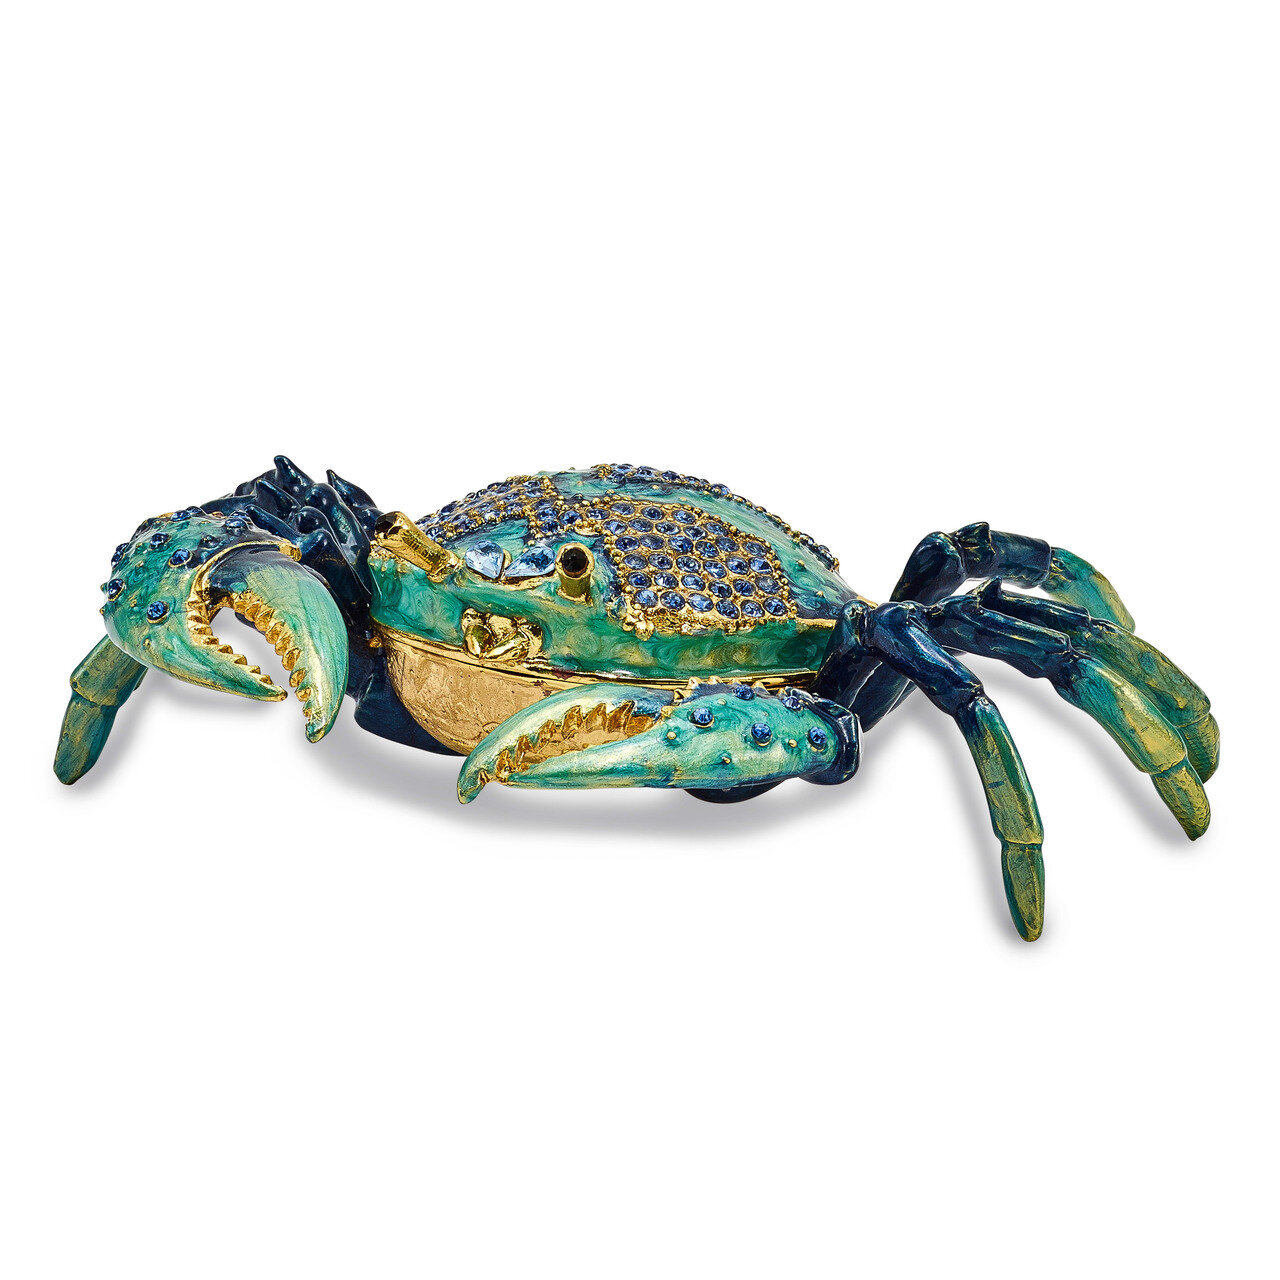 Blue Crab Trinket Box Enamel on Pewter by Jere